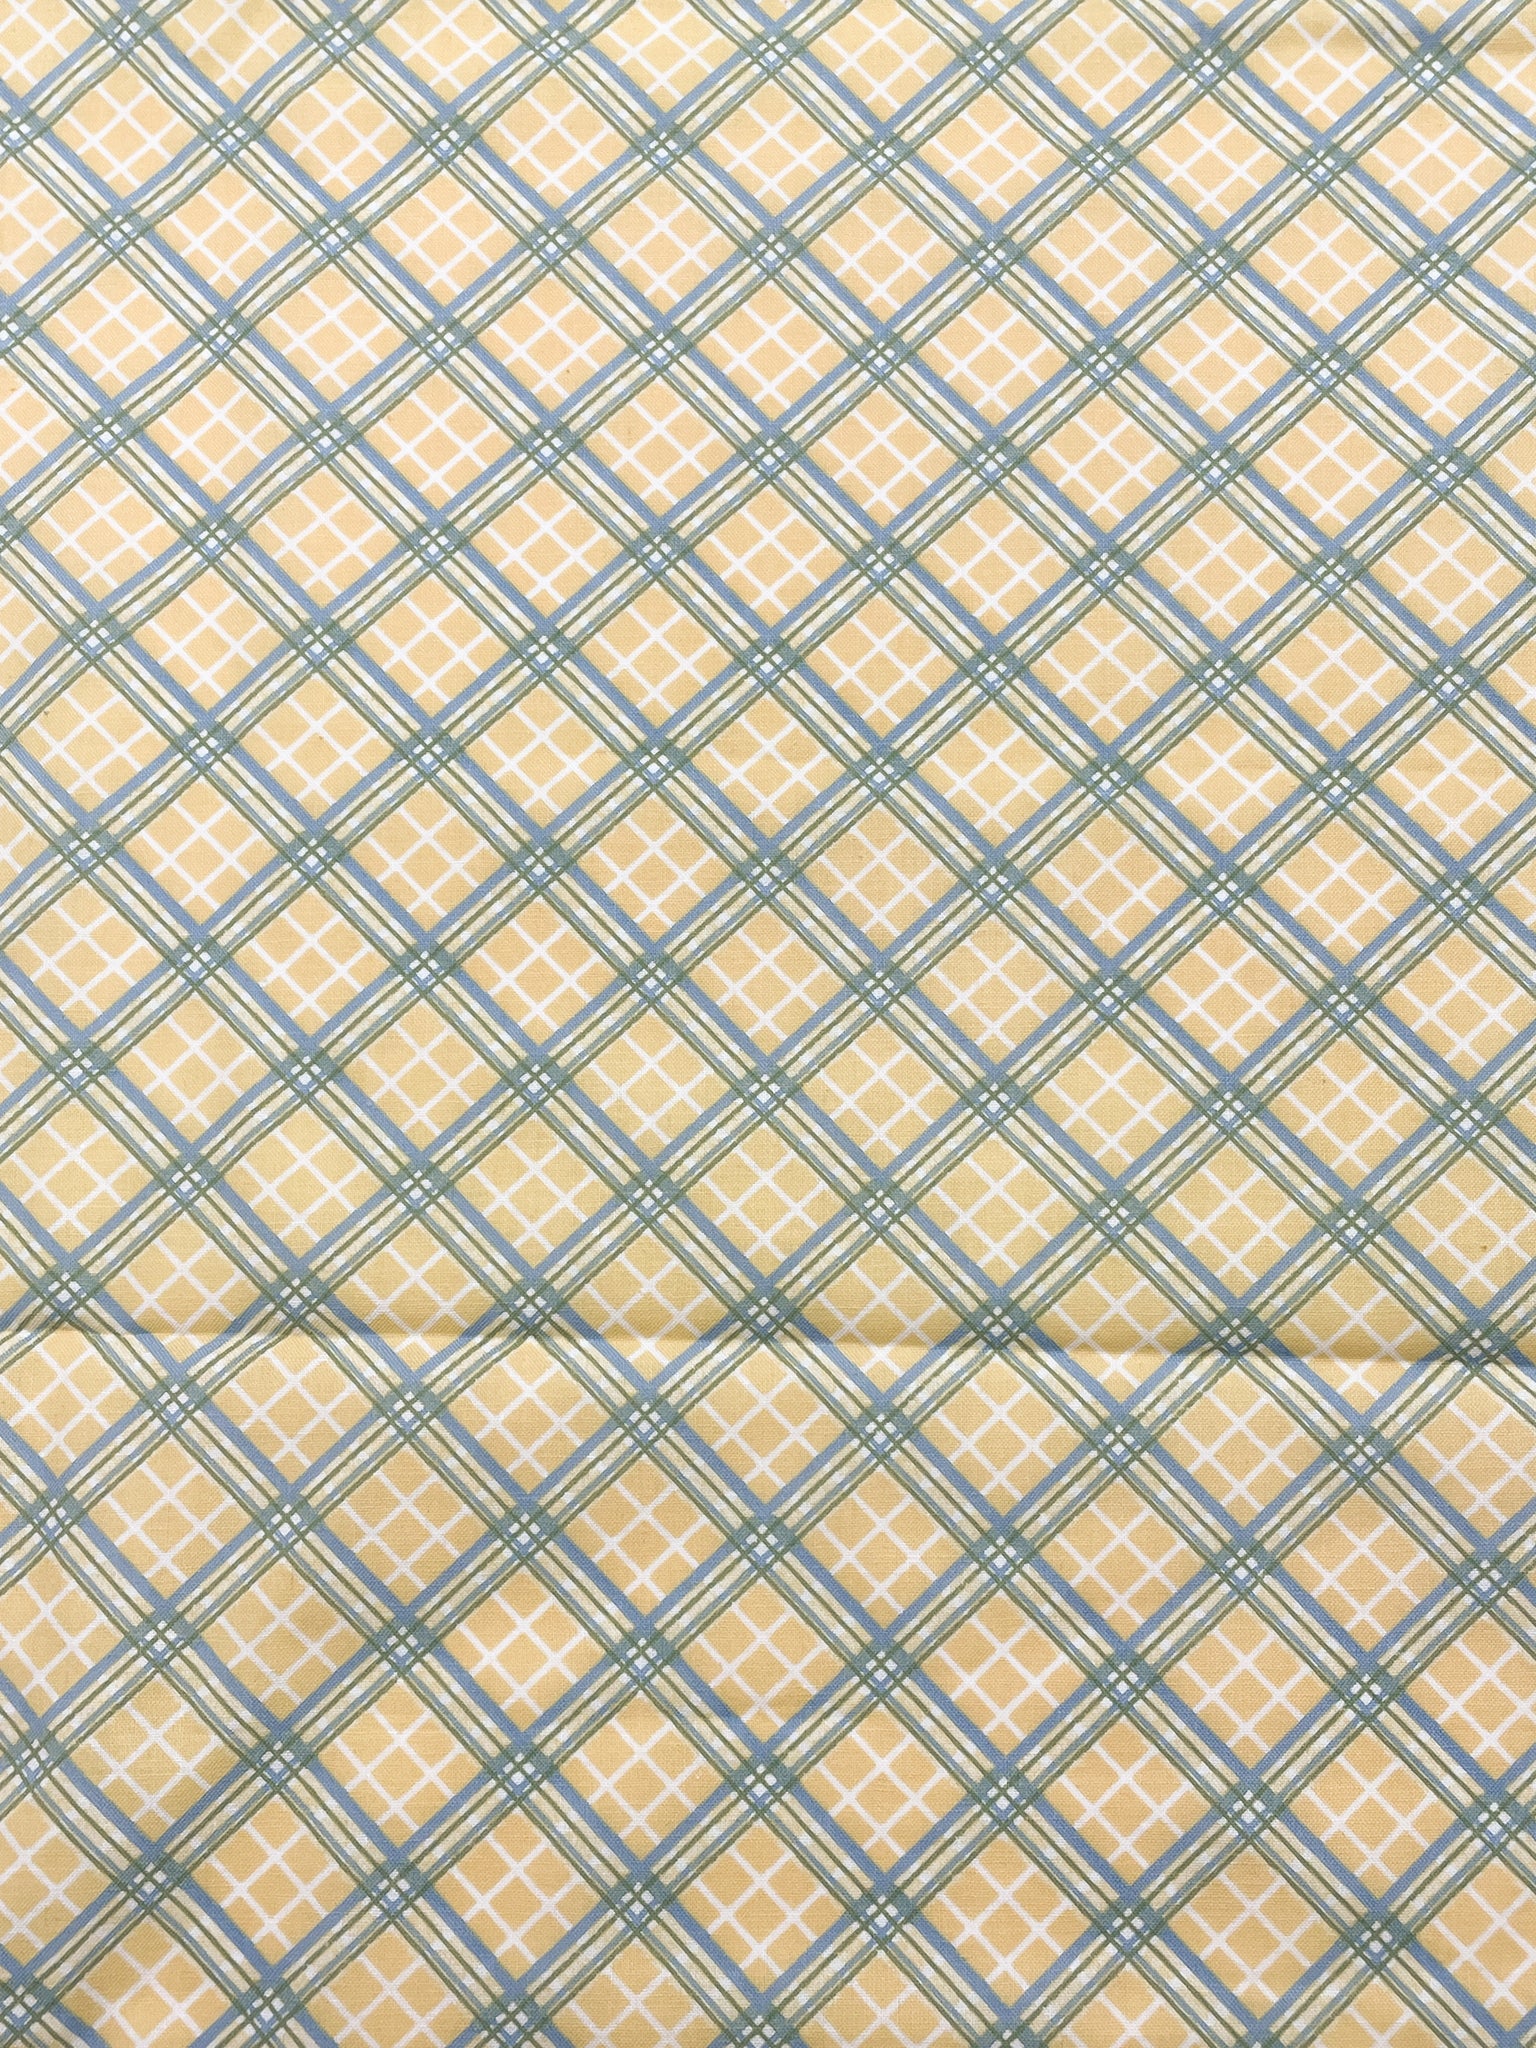 1 7/8 YD Quilting Cotton Printed Plaid - Yellow, Blue and White Bias Plaid